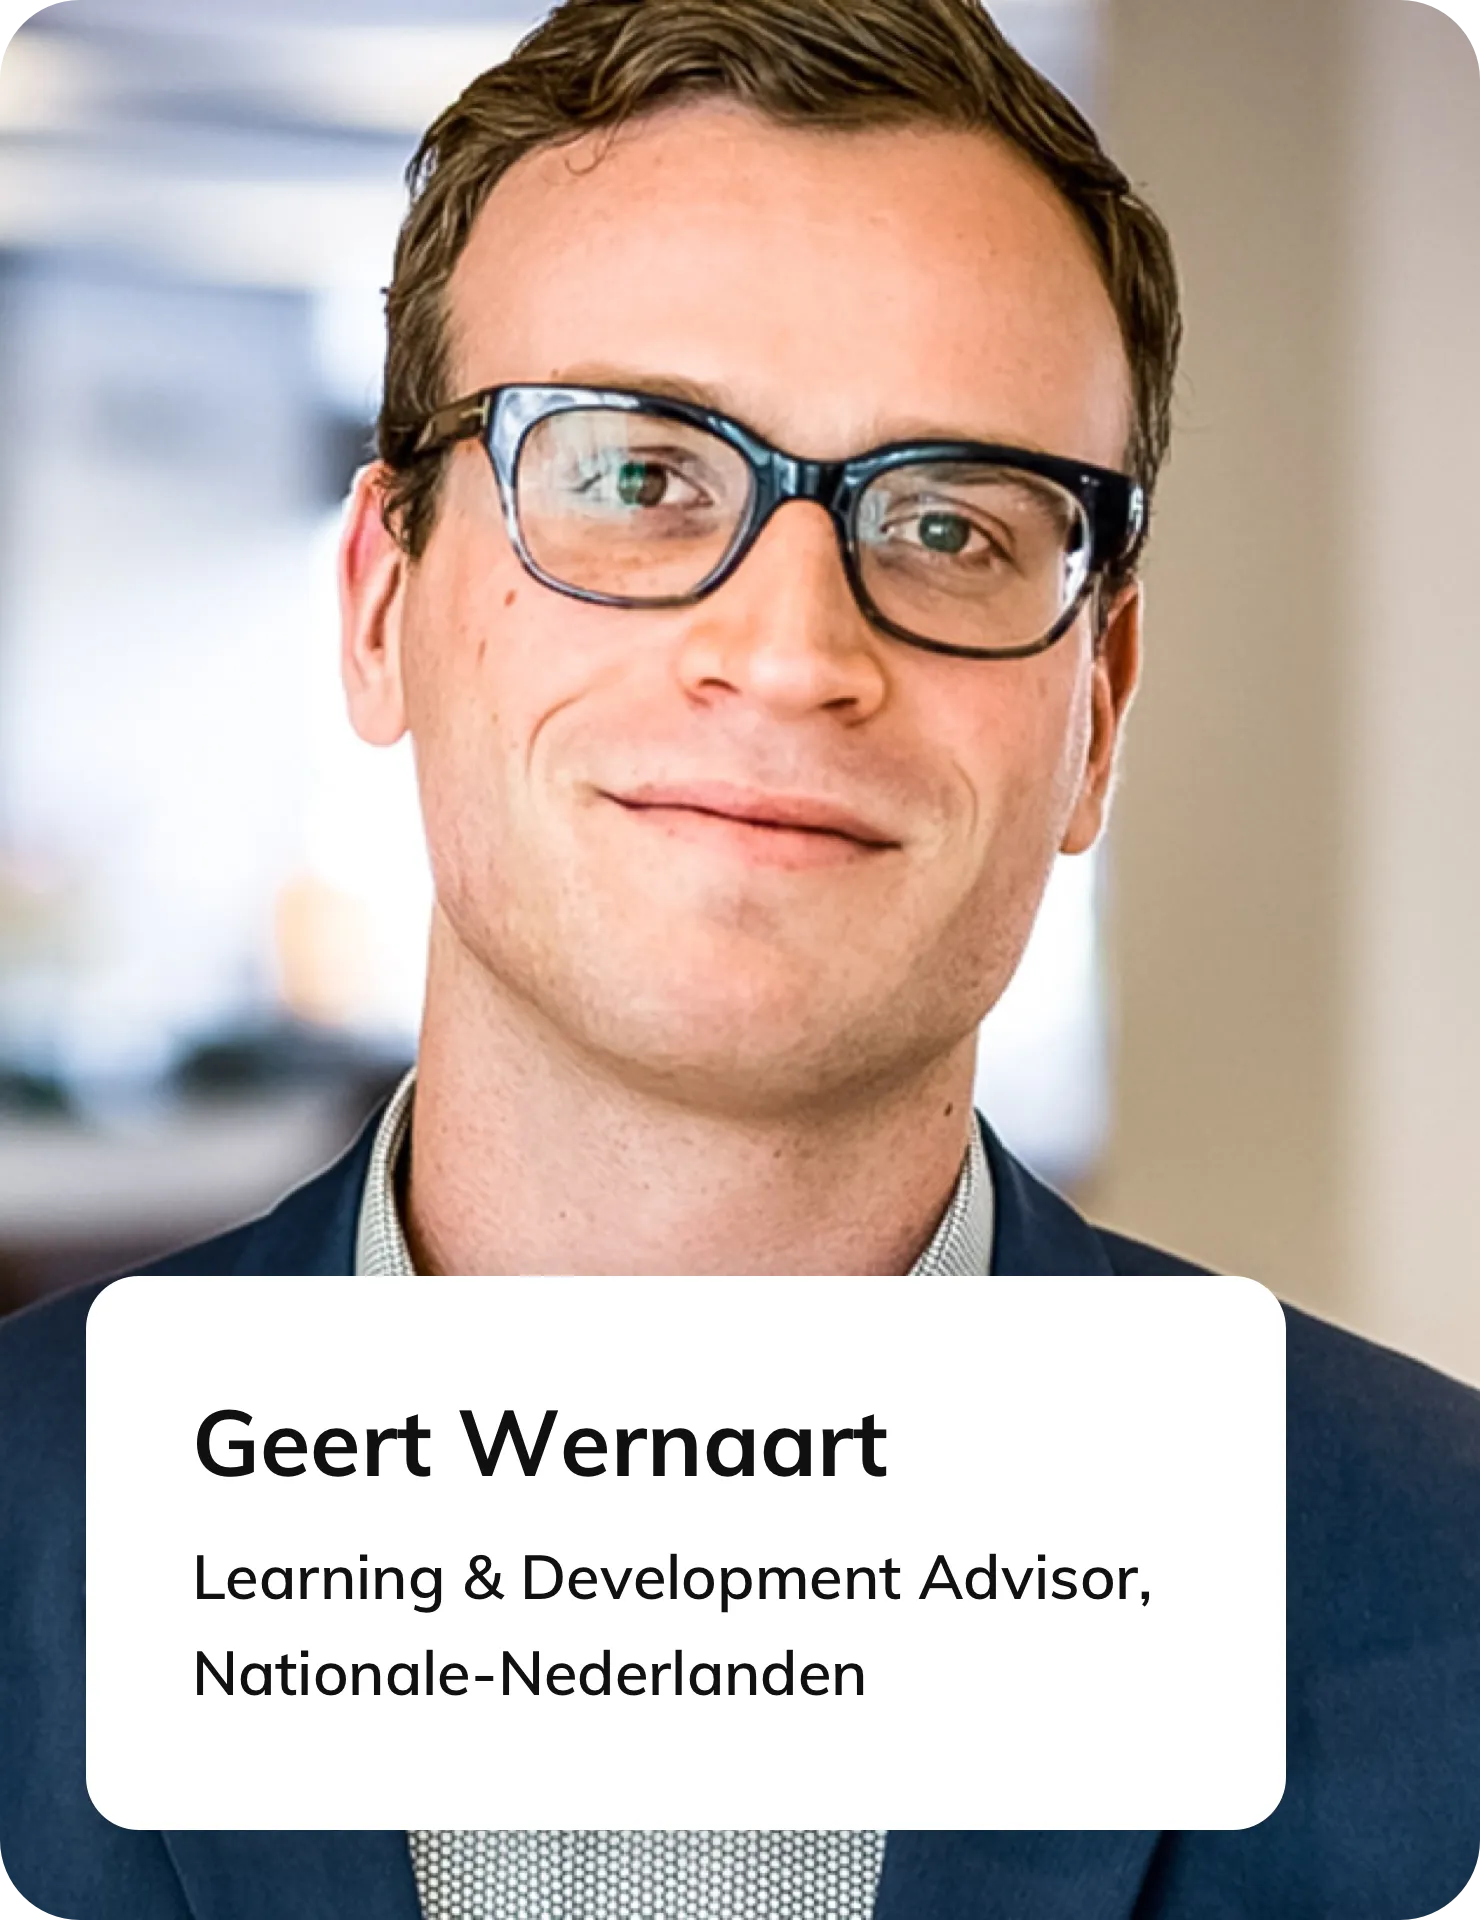 Former Learning & Development Advisor Geert Wernaart at Nationale Nederlanden